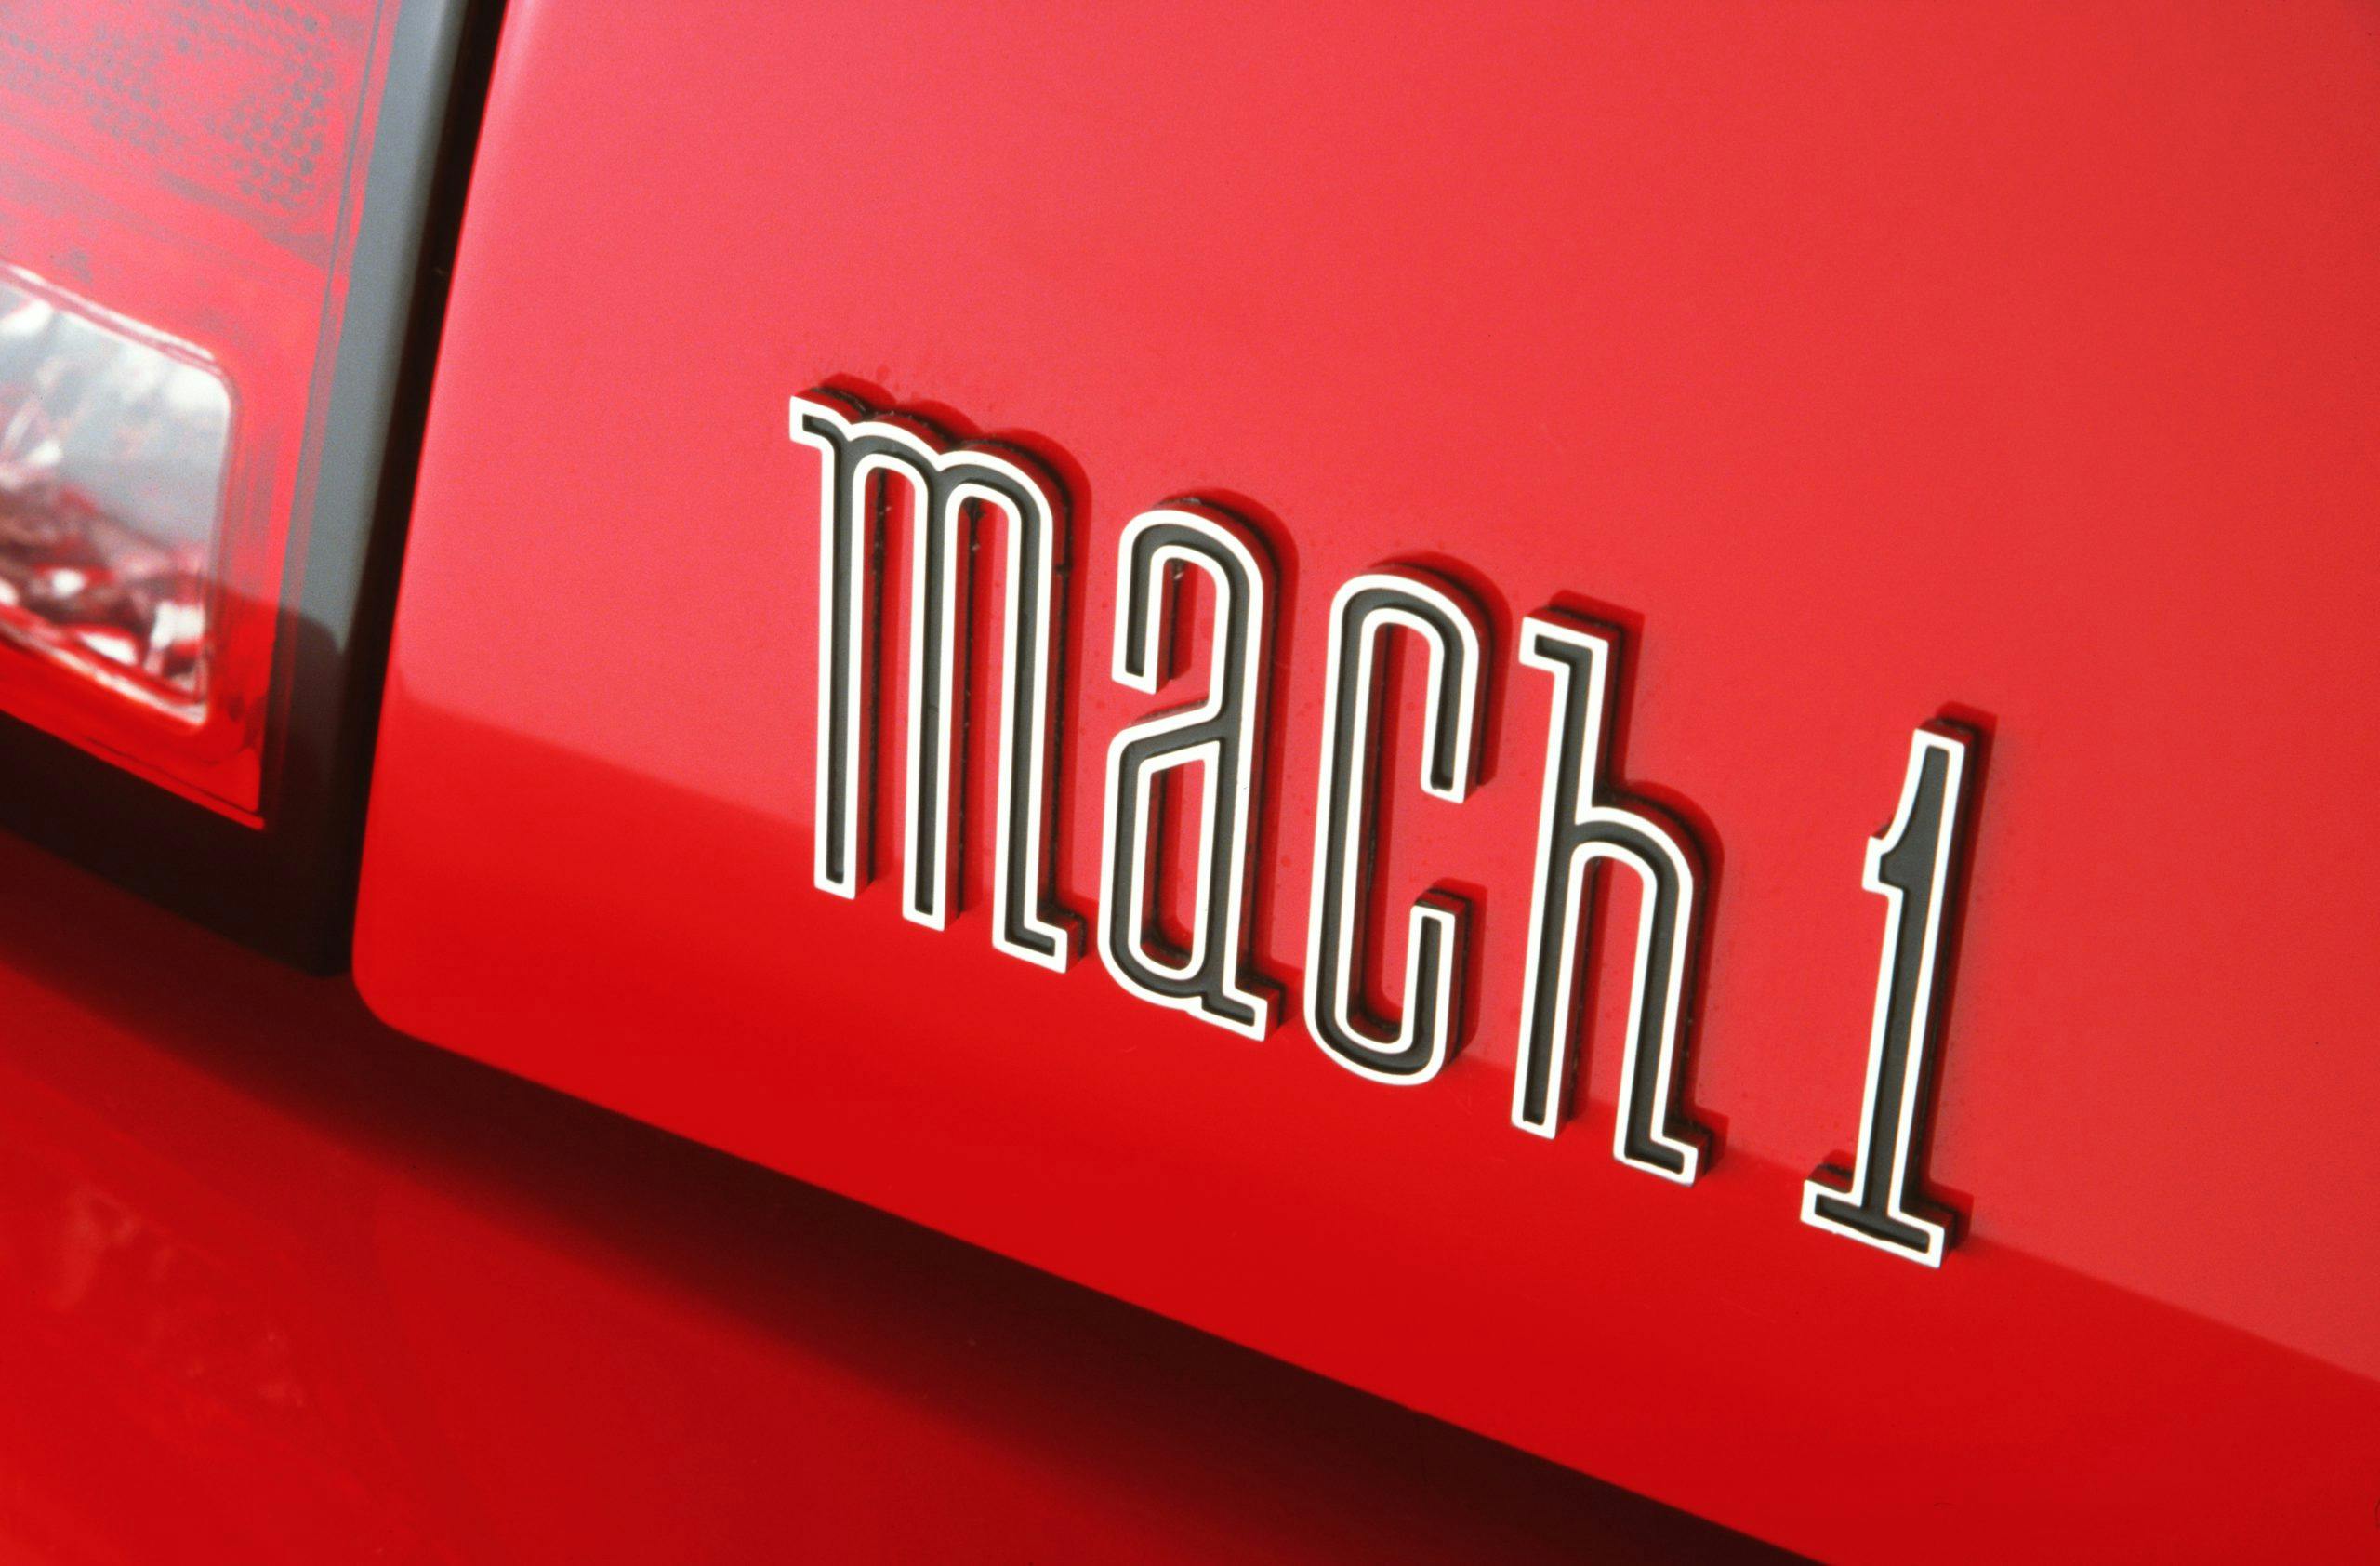 2003 Ford Mustang Mach 1 decklid emblem